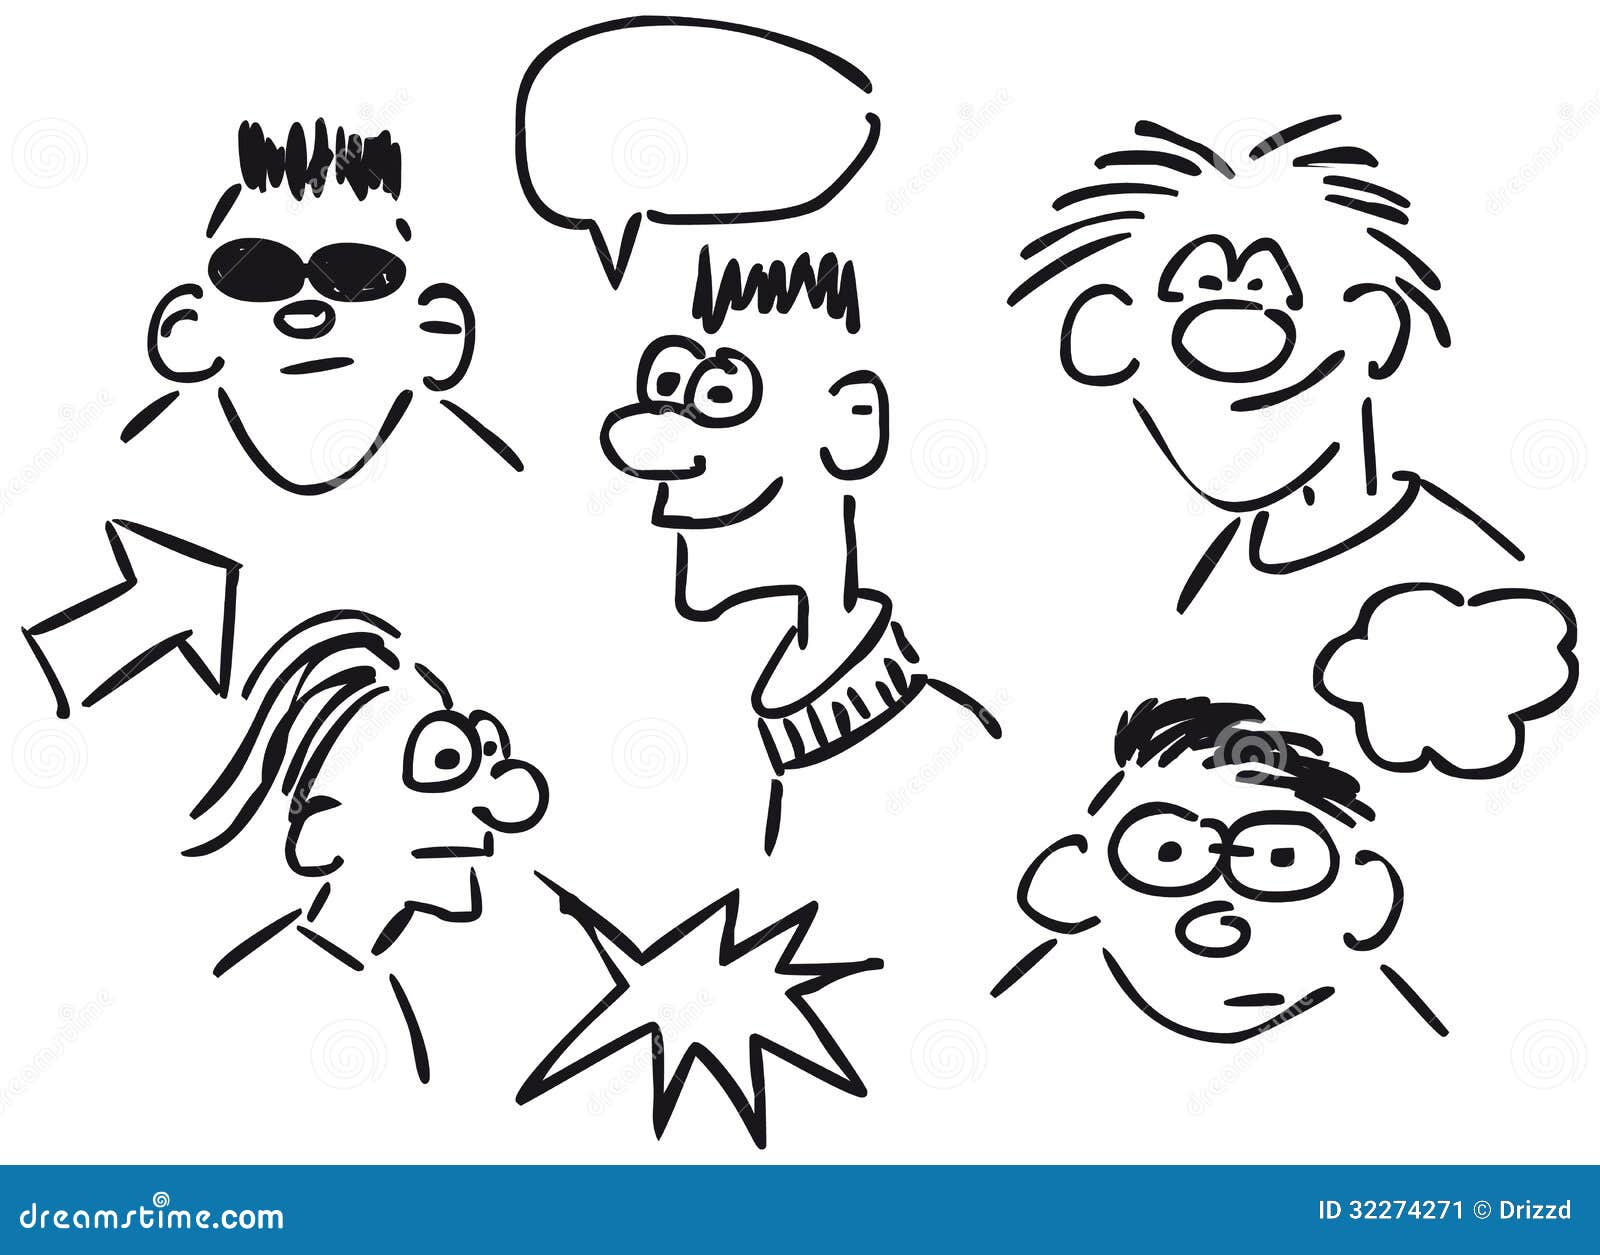 Cartoon faces stock illustration. Illustration of expression - 32274271